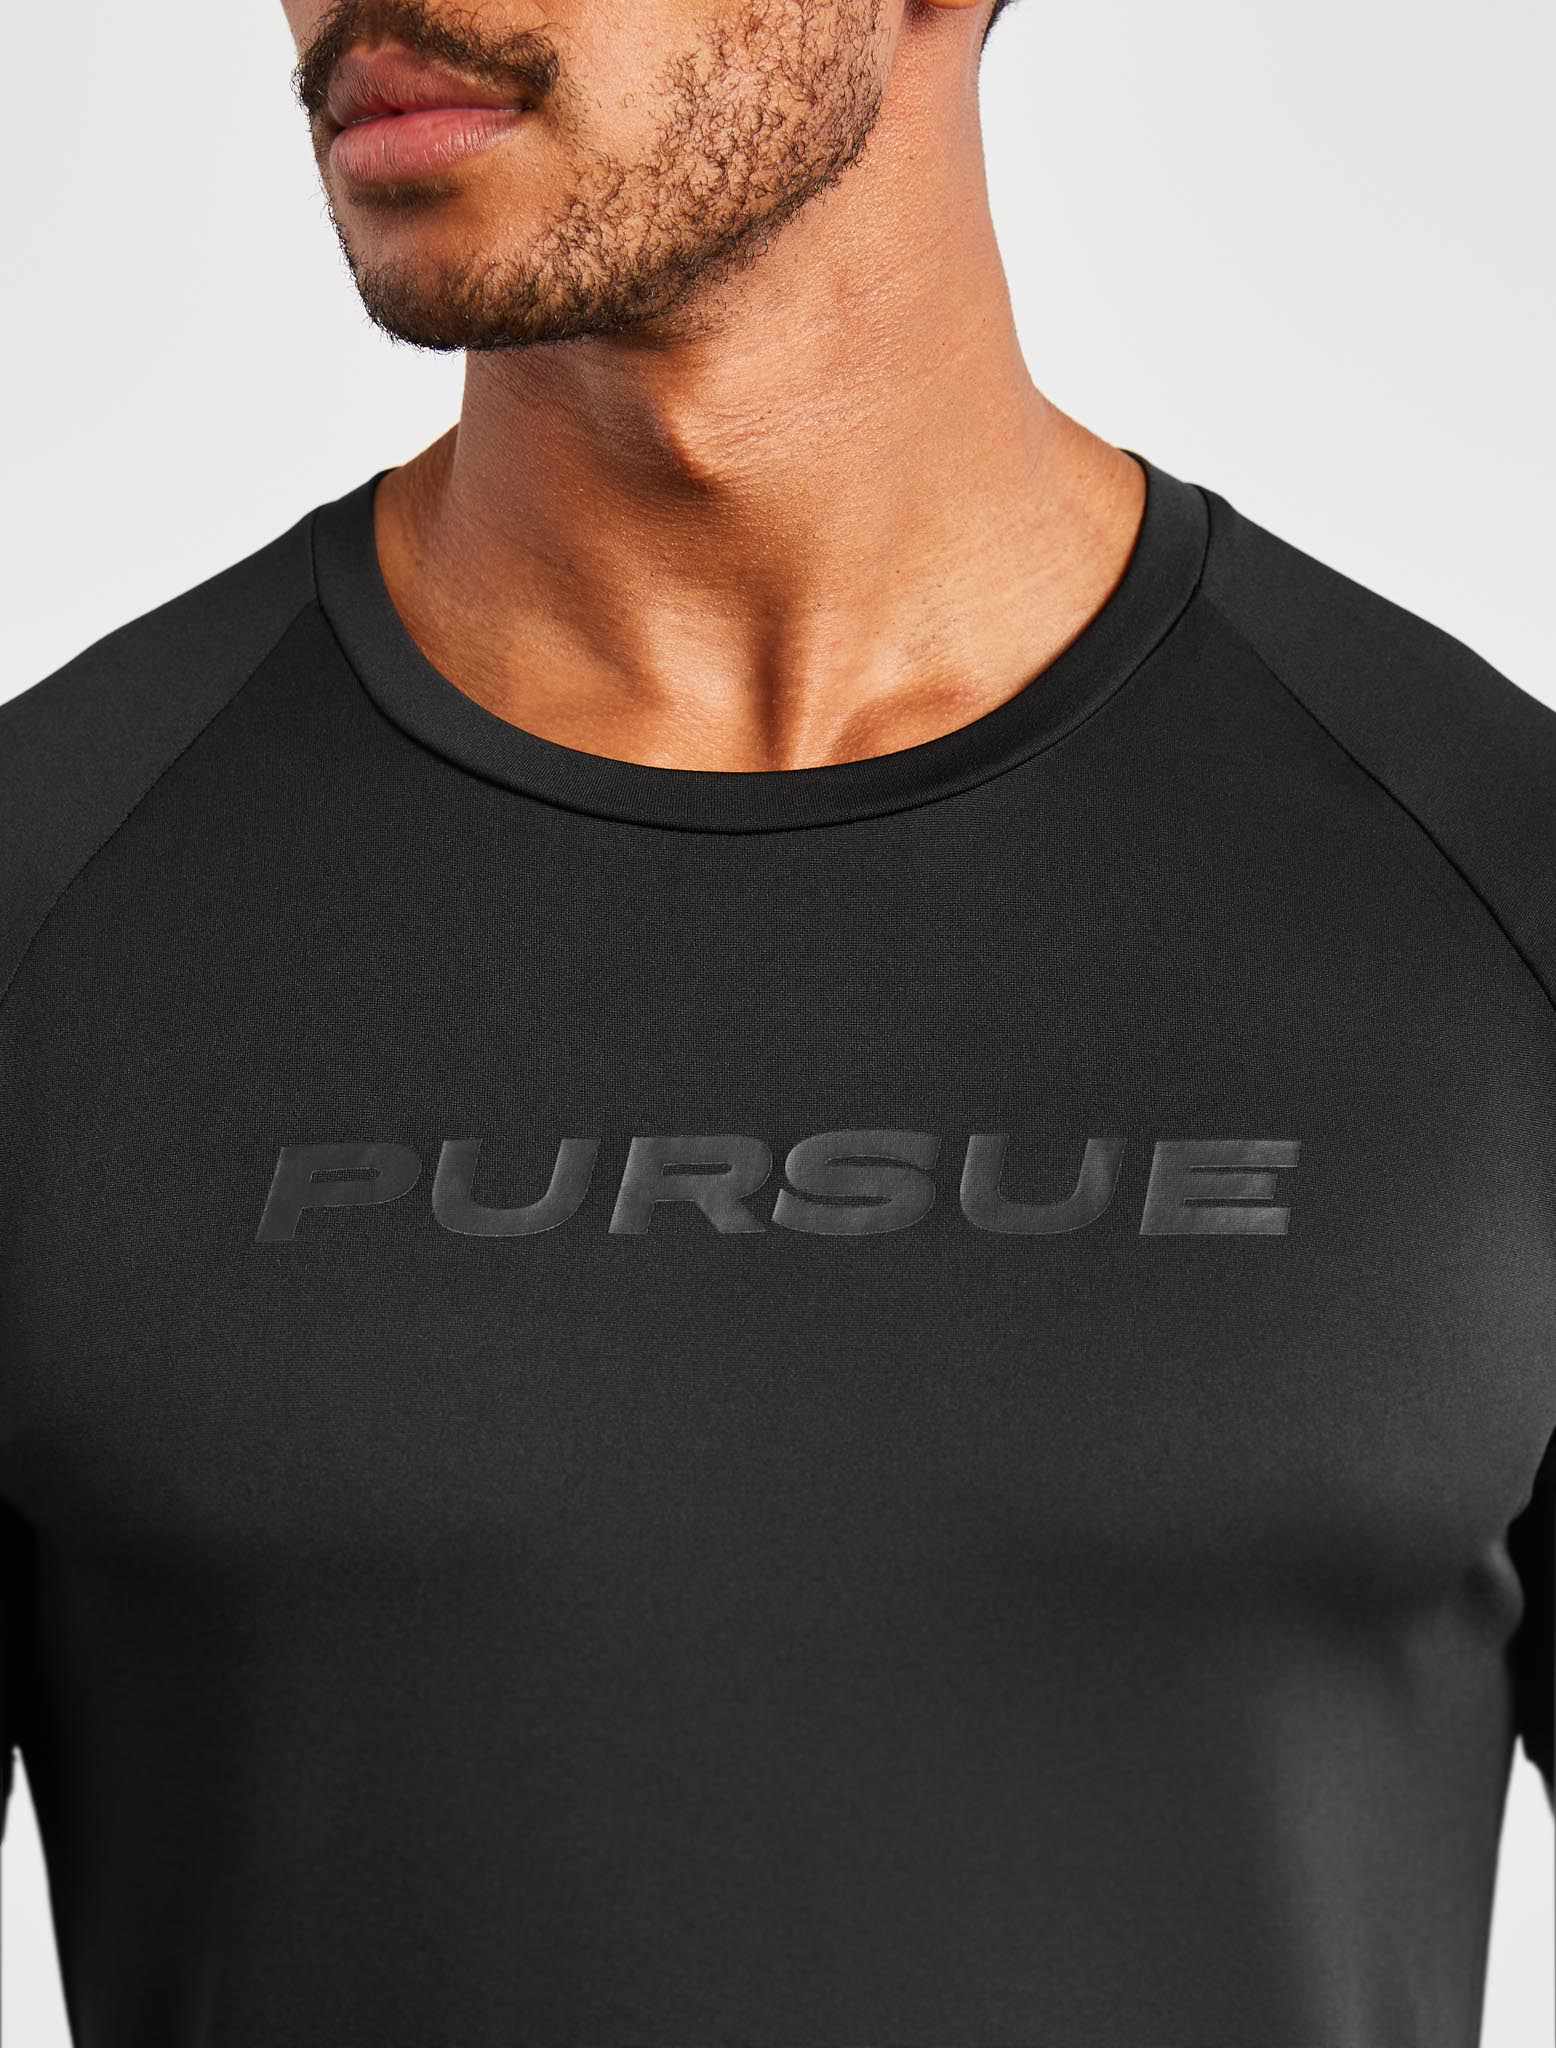 Statement T-Shirt / Black Pursue Fitness 2